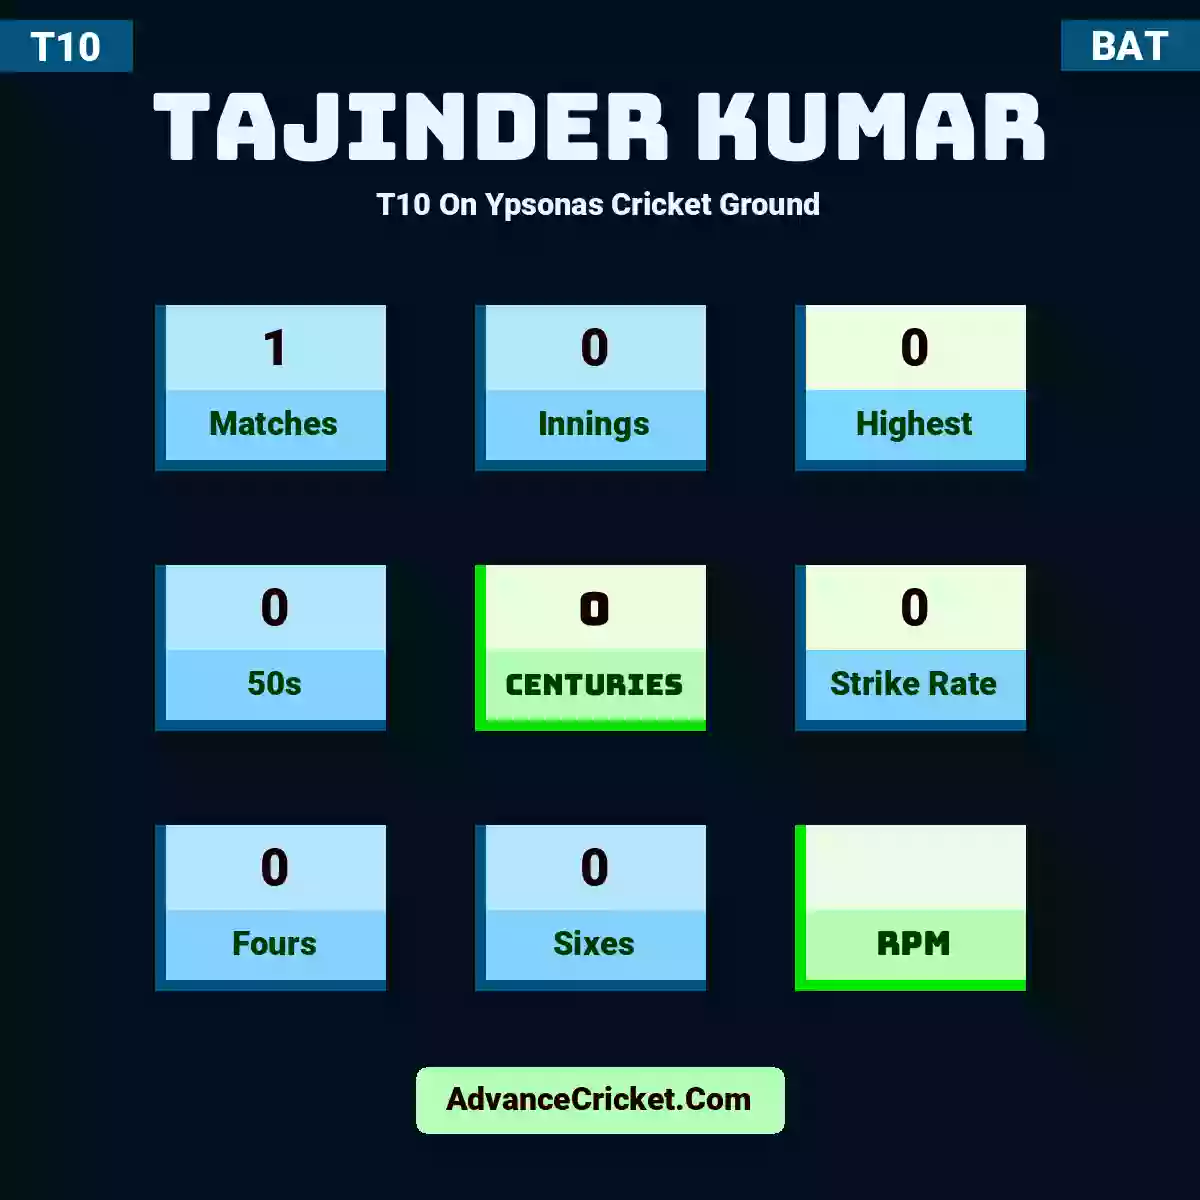 Tajinder Kumar T10  On Ypsonas Cricket Ground, Tajinder Kumar played 1 matches, scored 0 runs as highest, 0 half-centuries, and 0 centuries, with a strike rate of 0. T.Kumar hit 0 fours and 0 sixes.